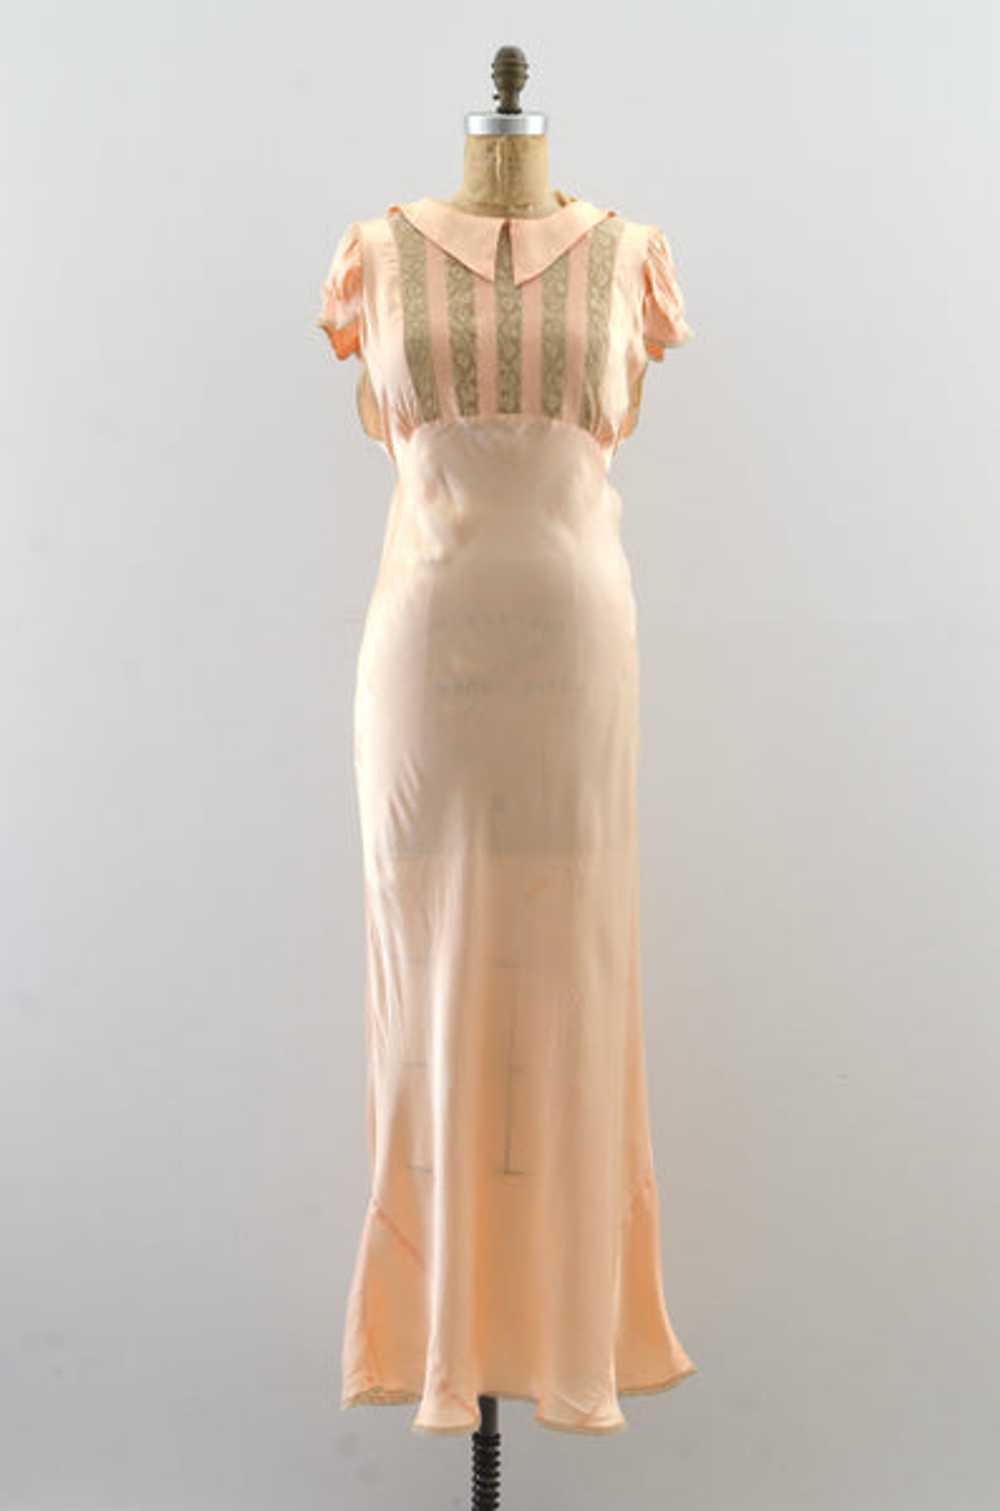 1940s Rayon Satin Nightgown - image 1